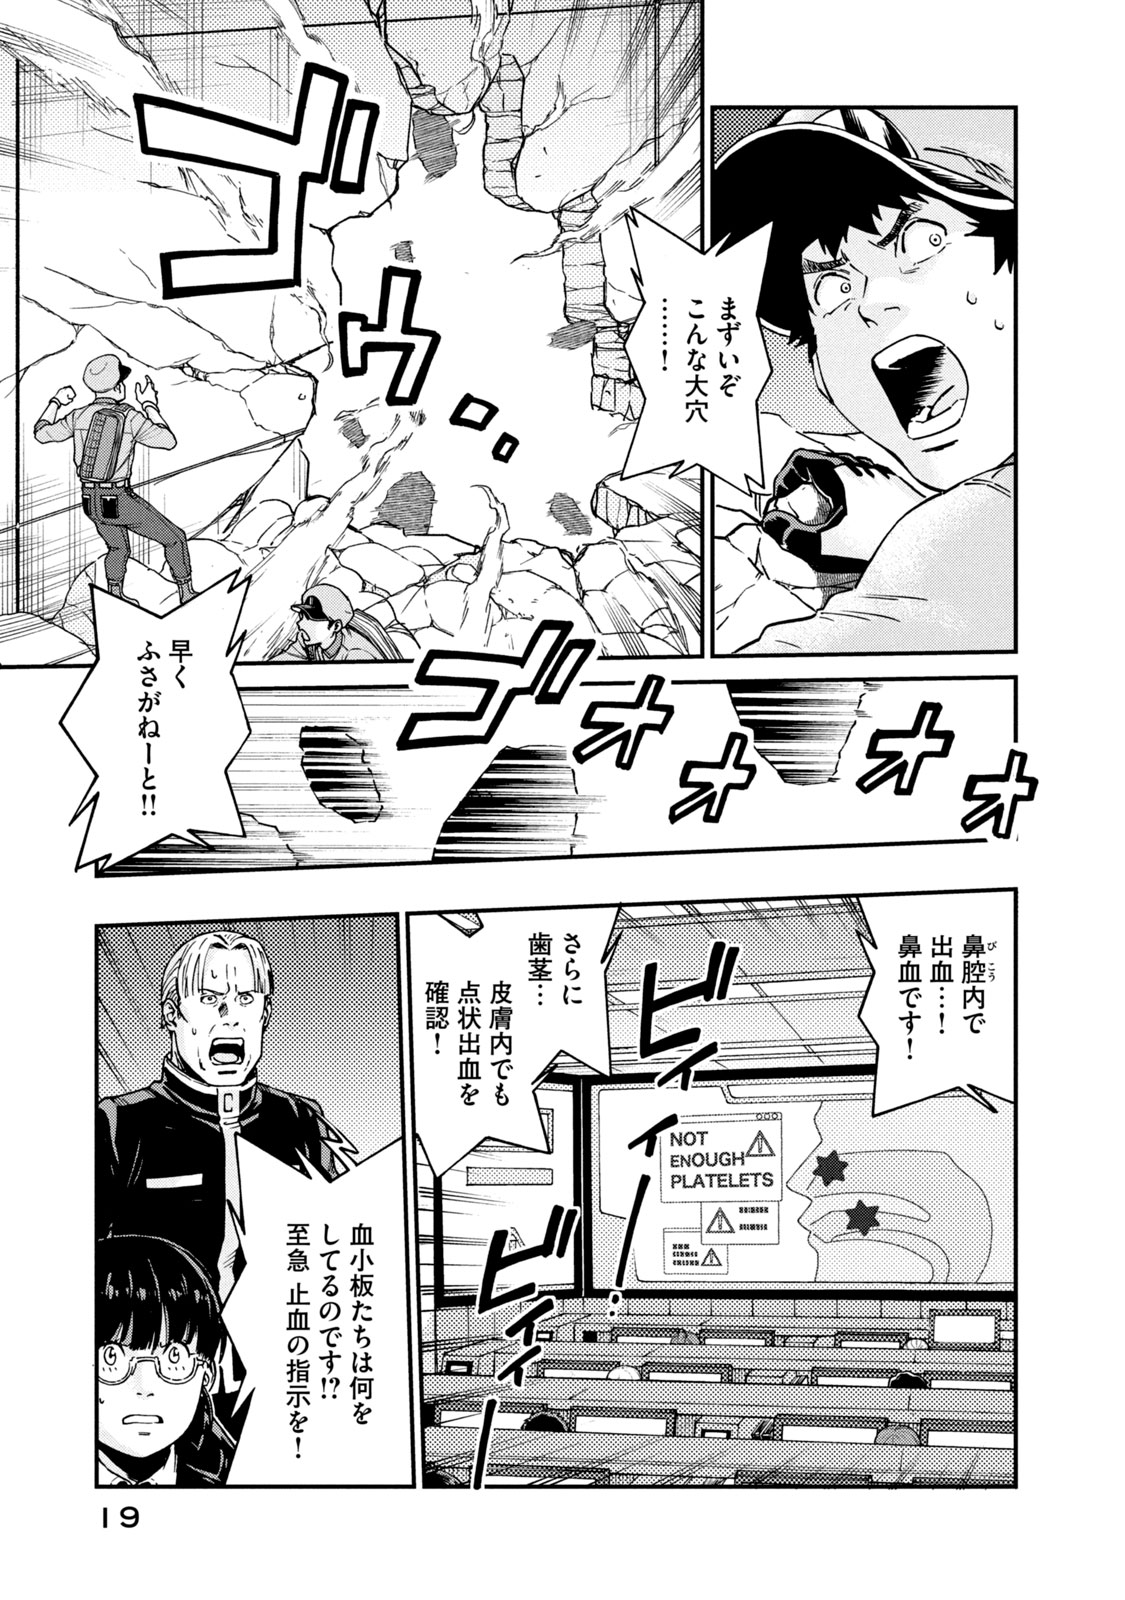 Hataraku Saibou BLACK - Chapter 42 - Page 21